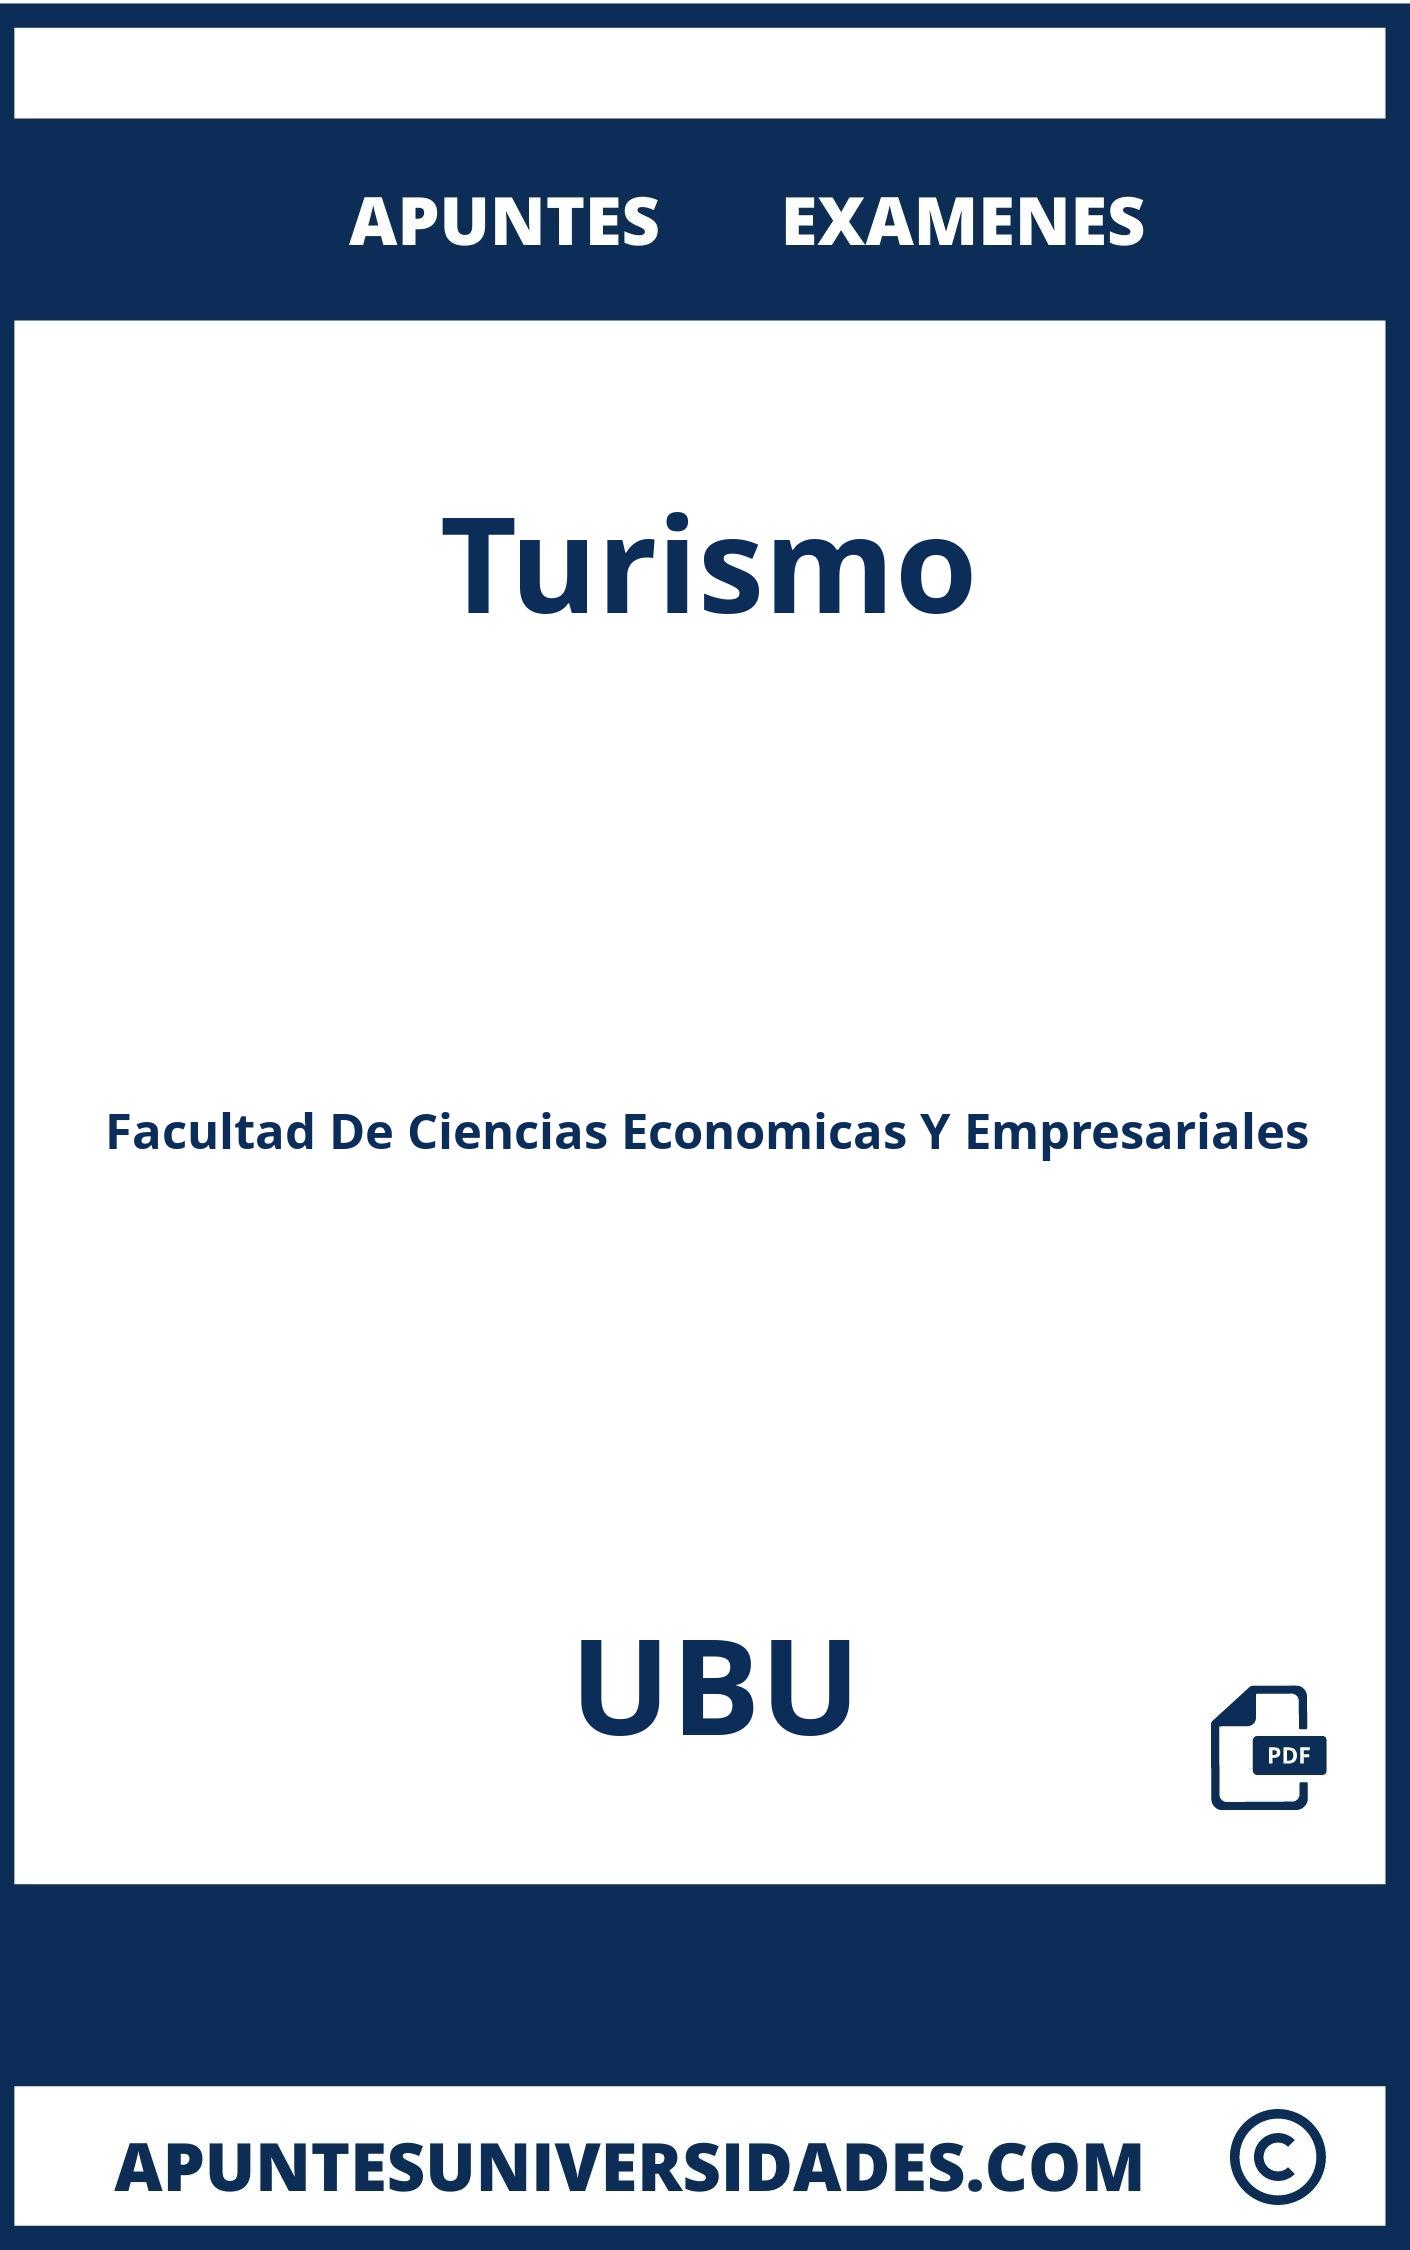 Examenes y Apuntes Turismo UBU